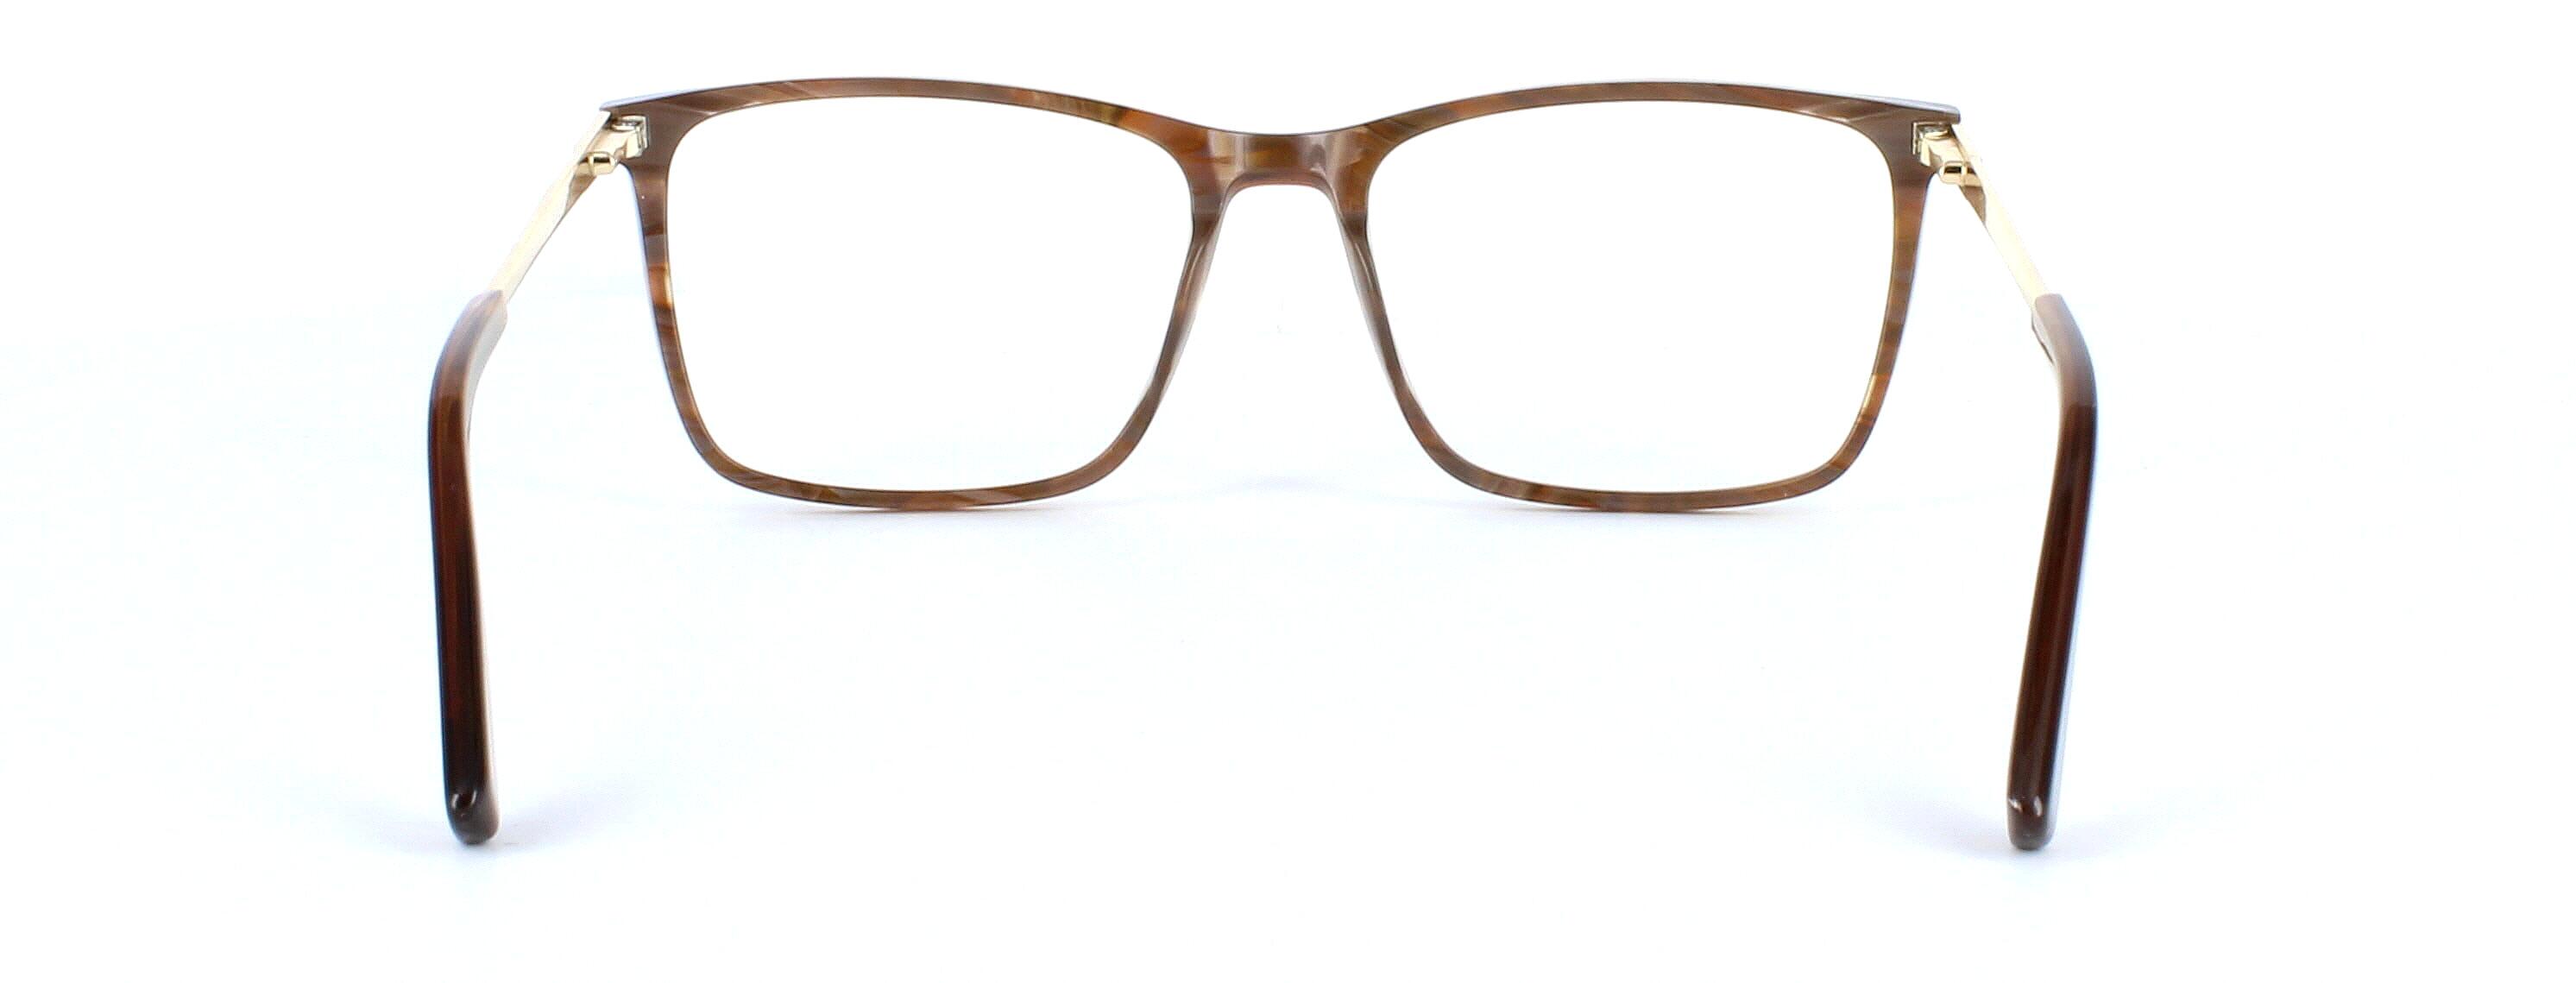 Farleigh - Men's full rim acetate glasses frame in shiny havannah - image view 3